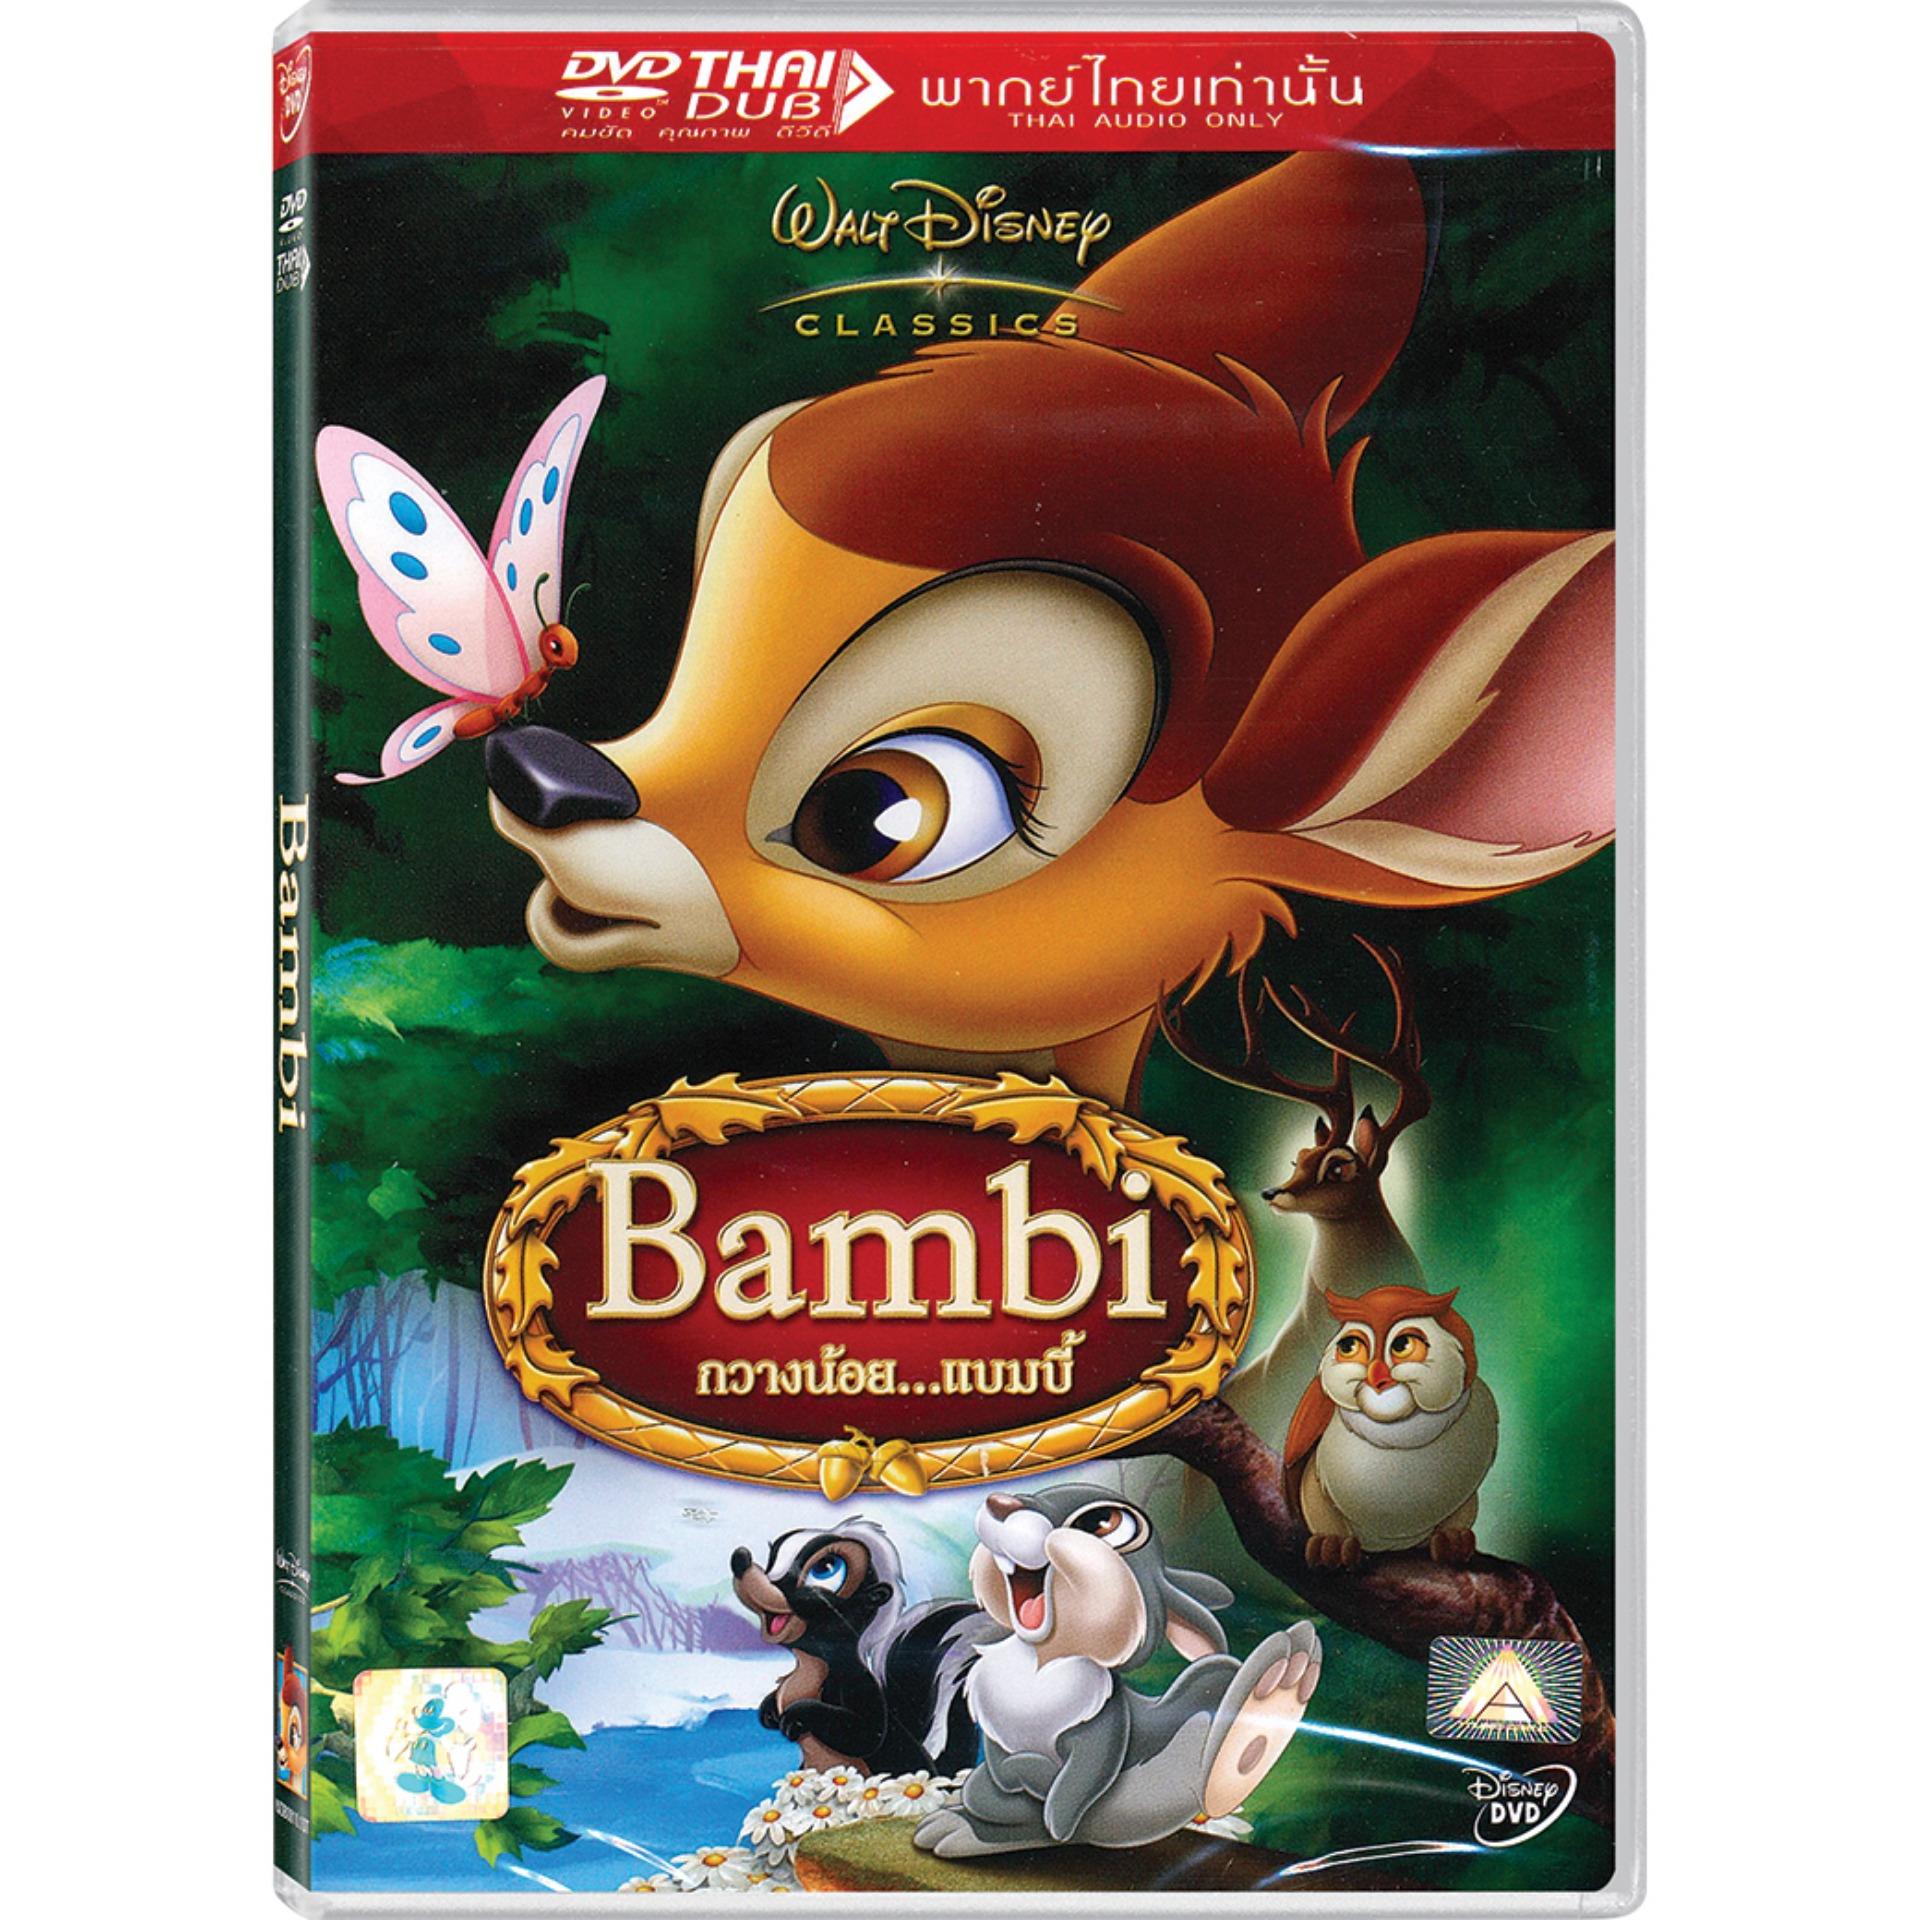 Media Play Bambi กวางน้อย... แบมบี้ (Disney) (DVD-vanilla)